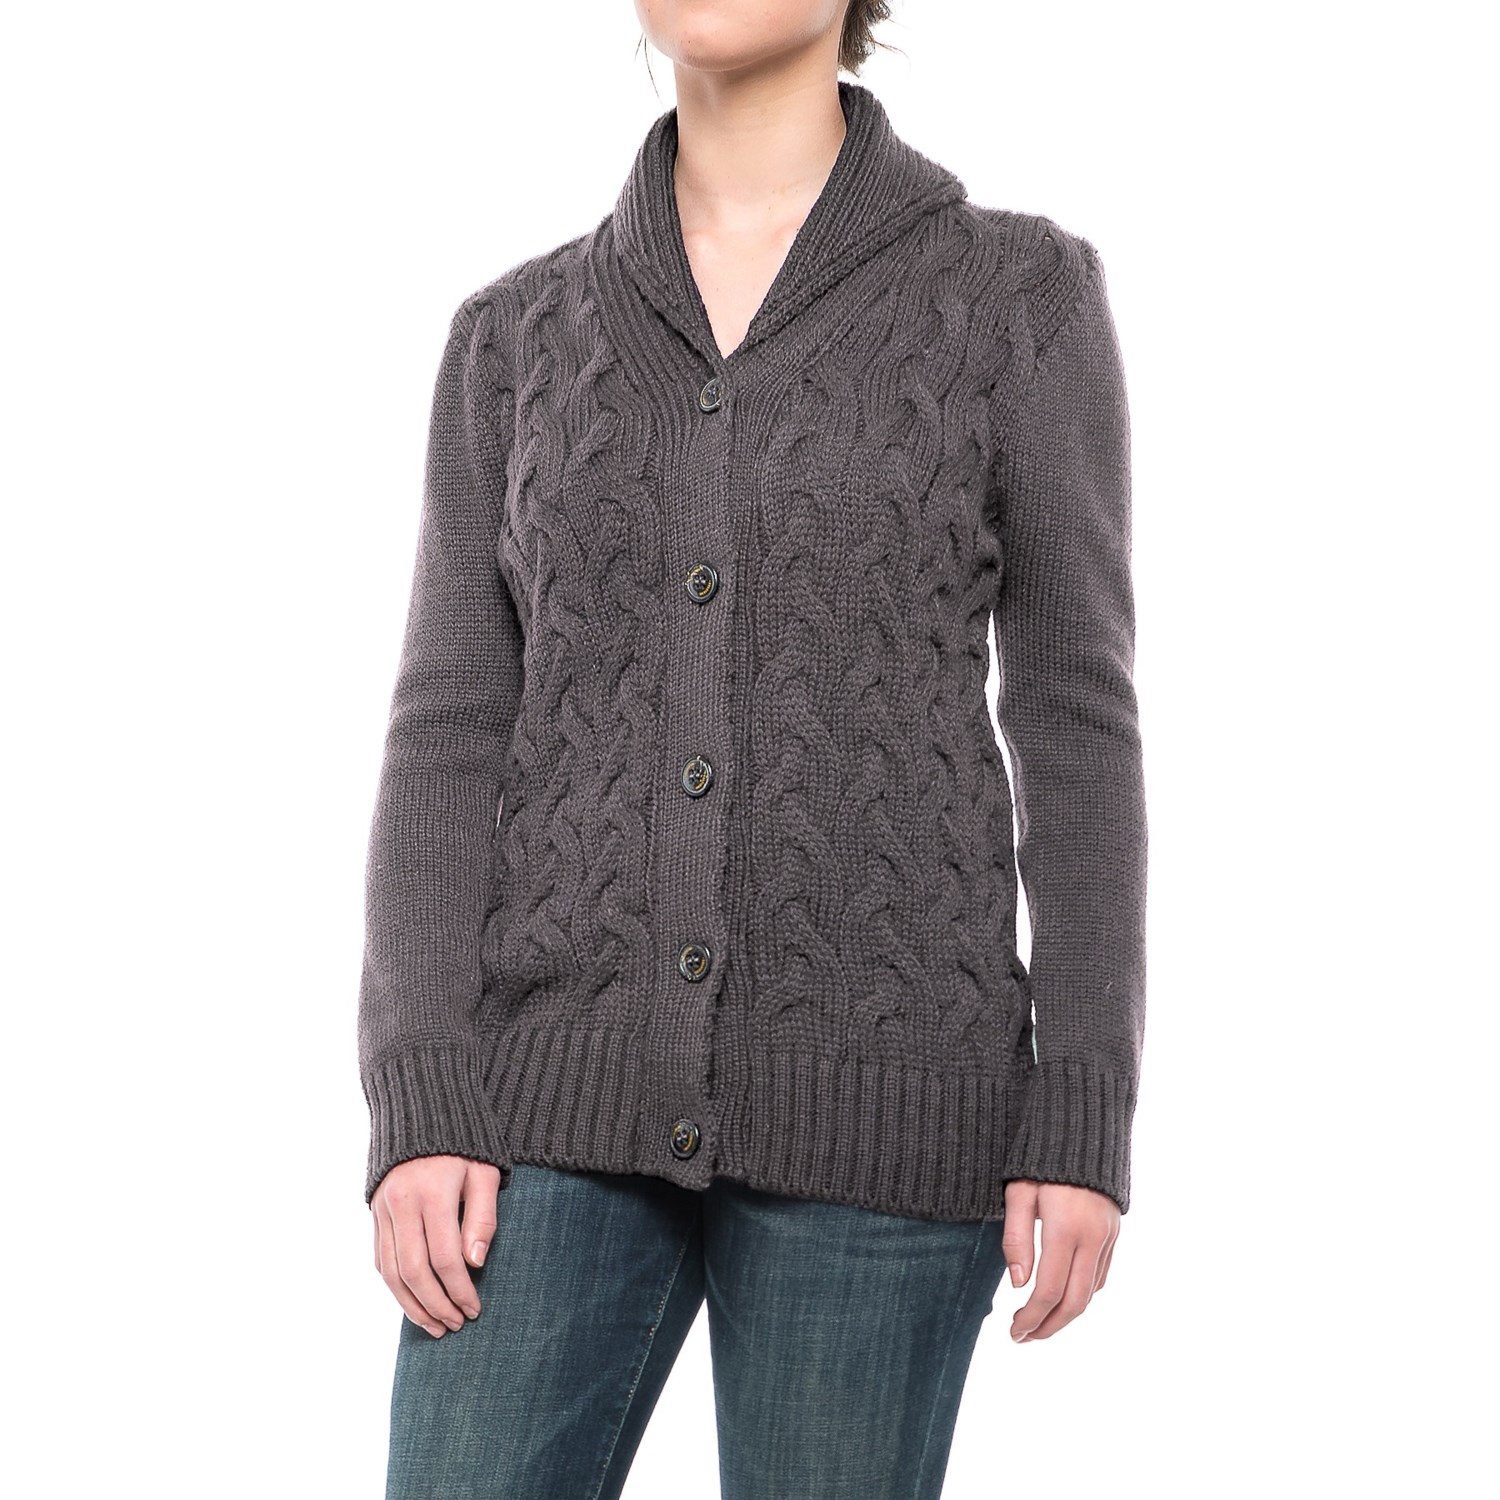 J.G. Glover & CO. Corden Shawl Cardigan Sweater – Merino Wool (For Women)